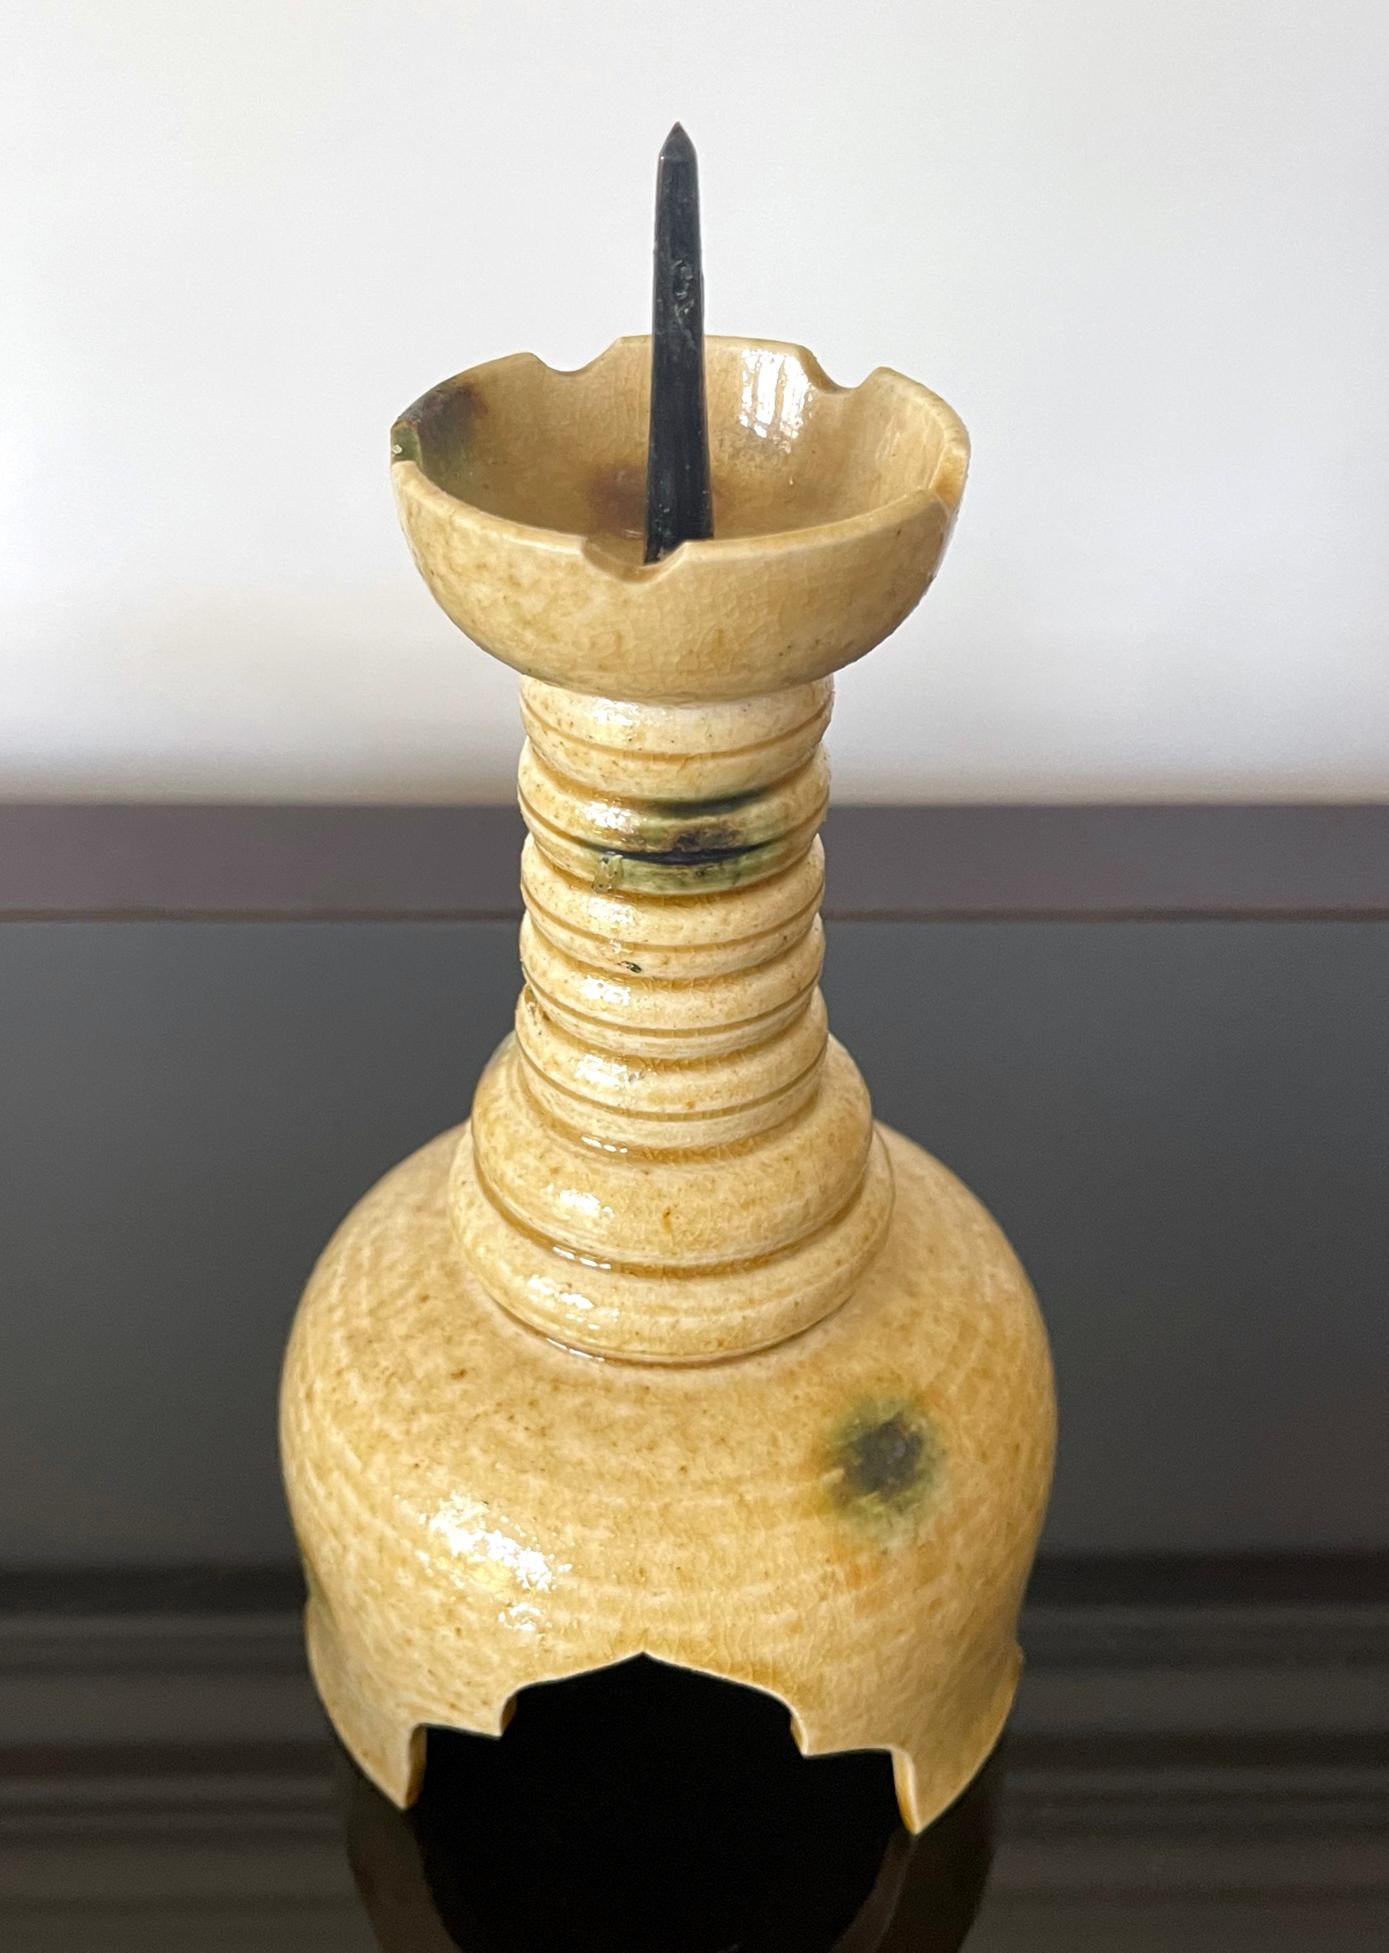 20th Century Set of Ki-Seto Ceramic Altar Pieces from Korean Empire Period For Sale